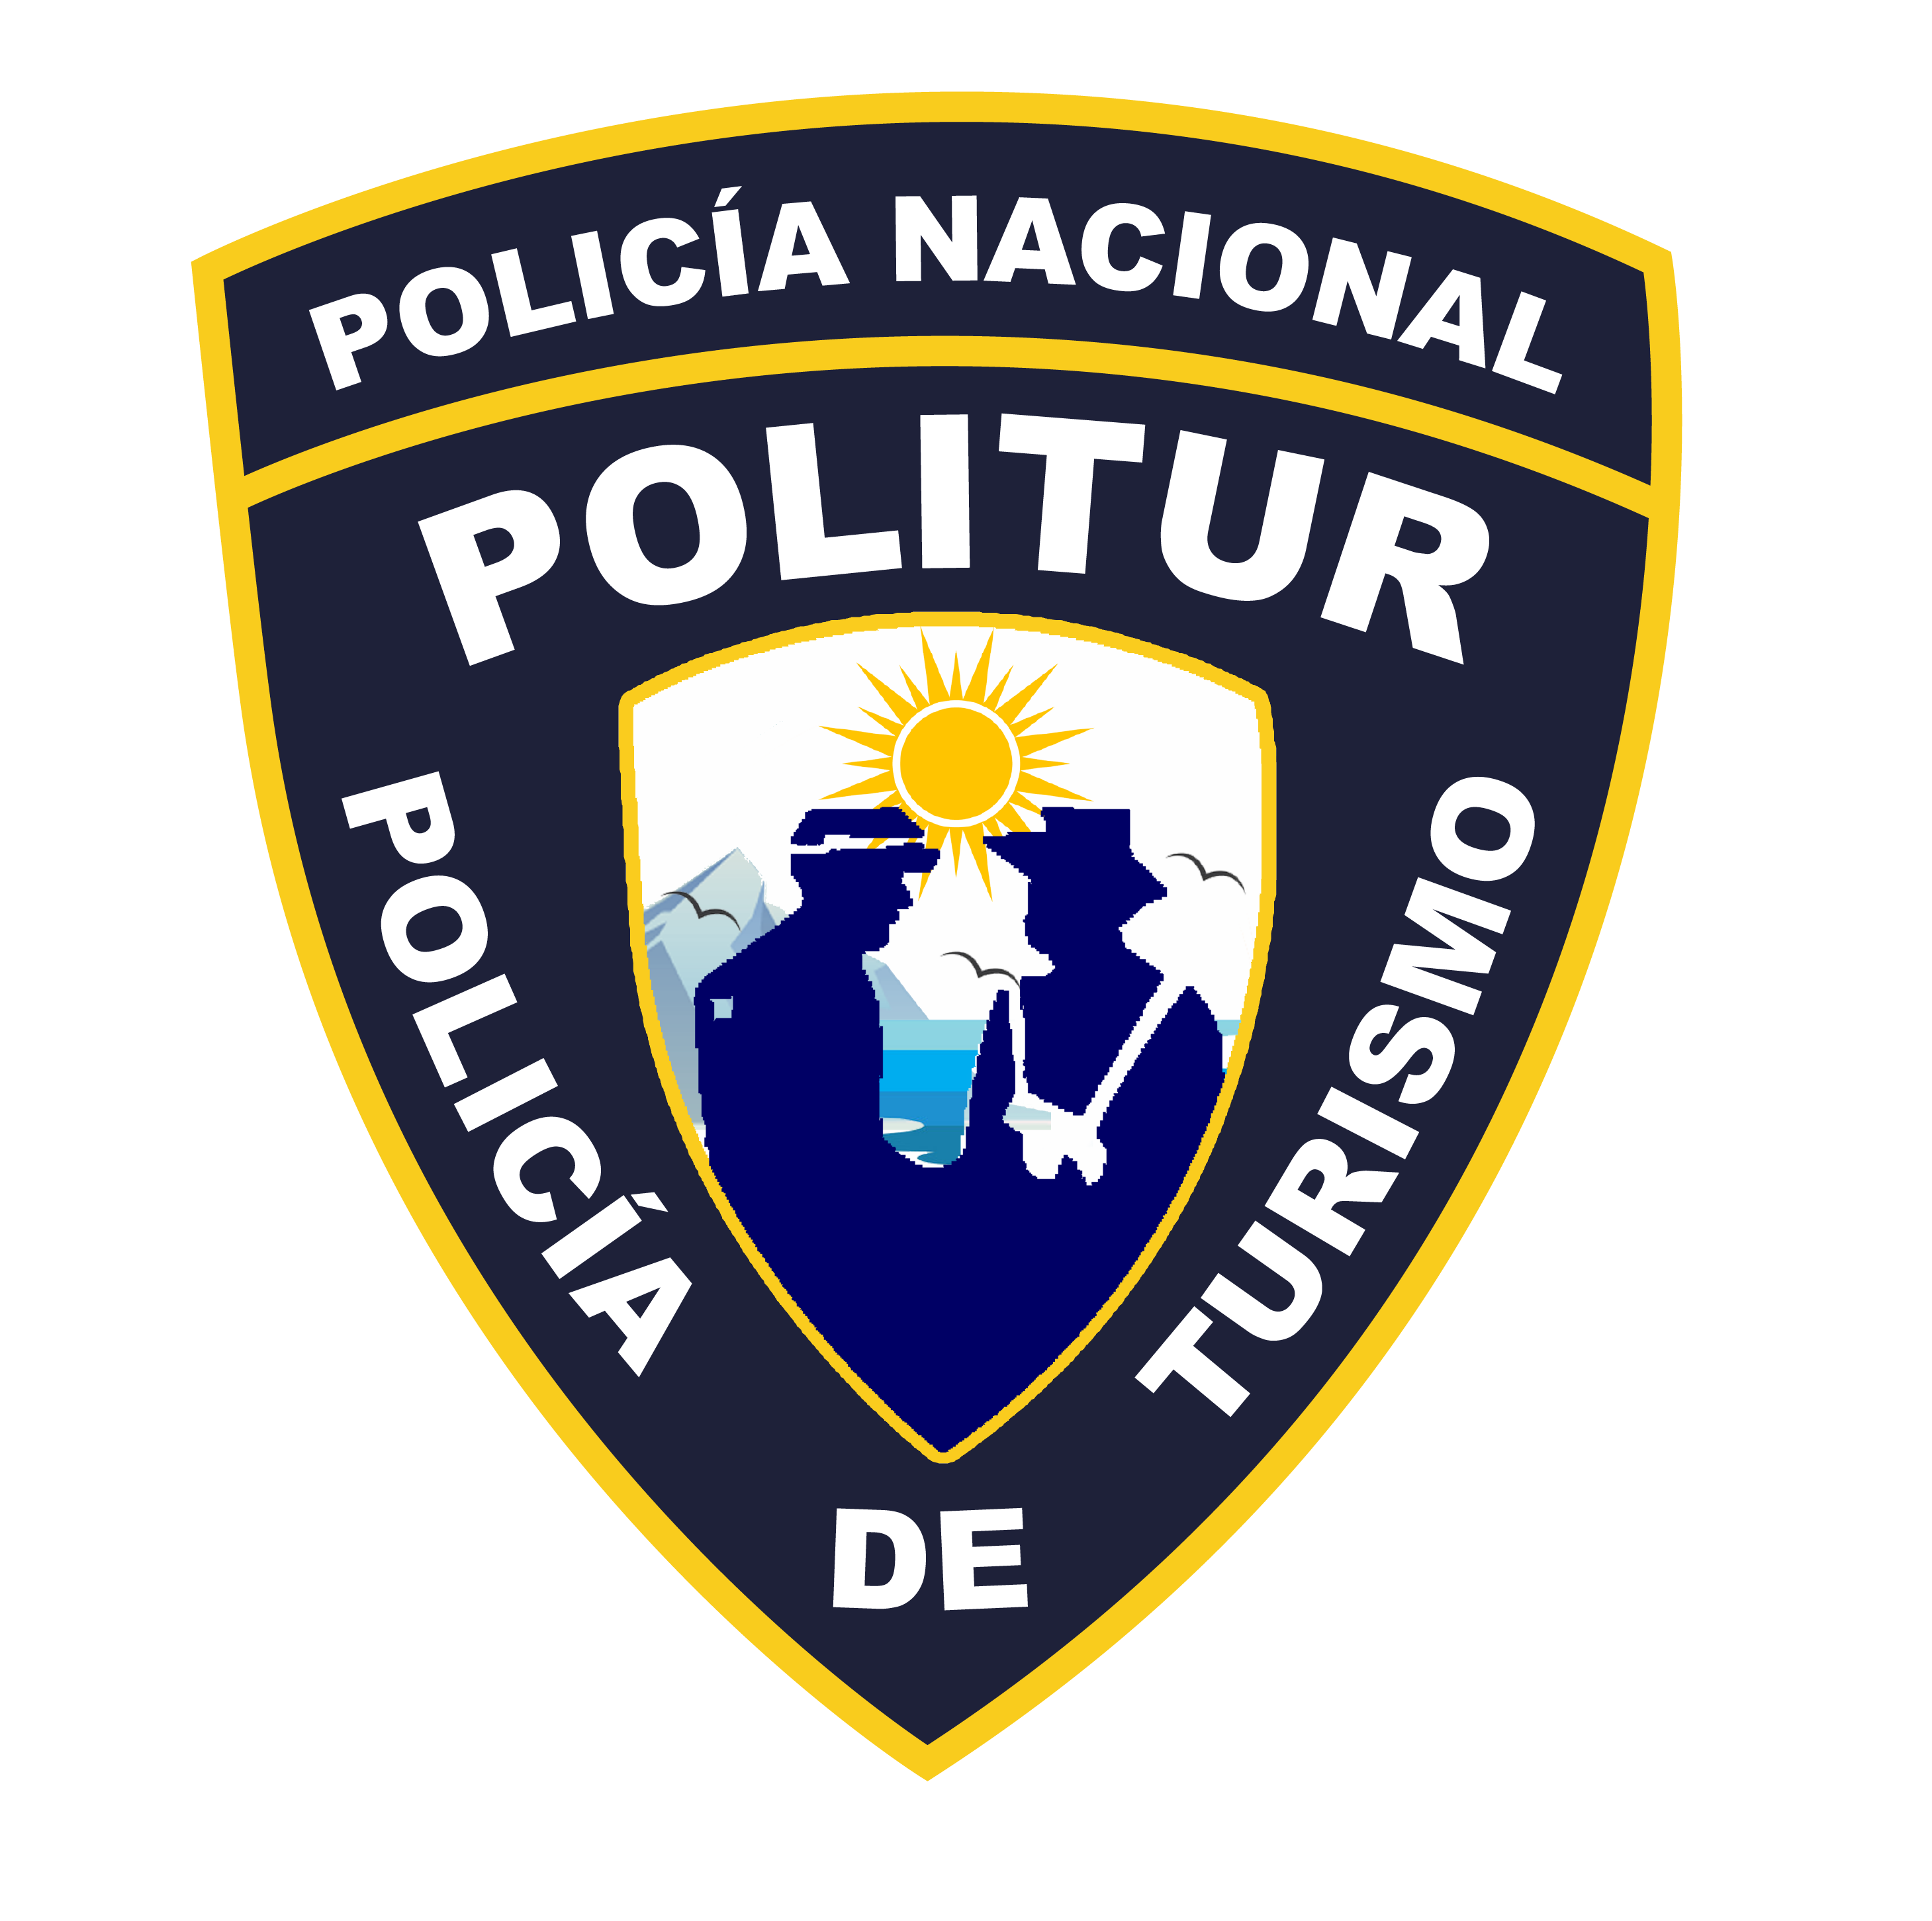 Politur logo